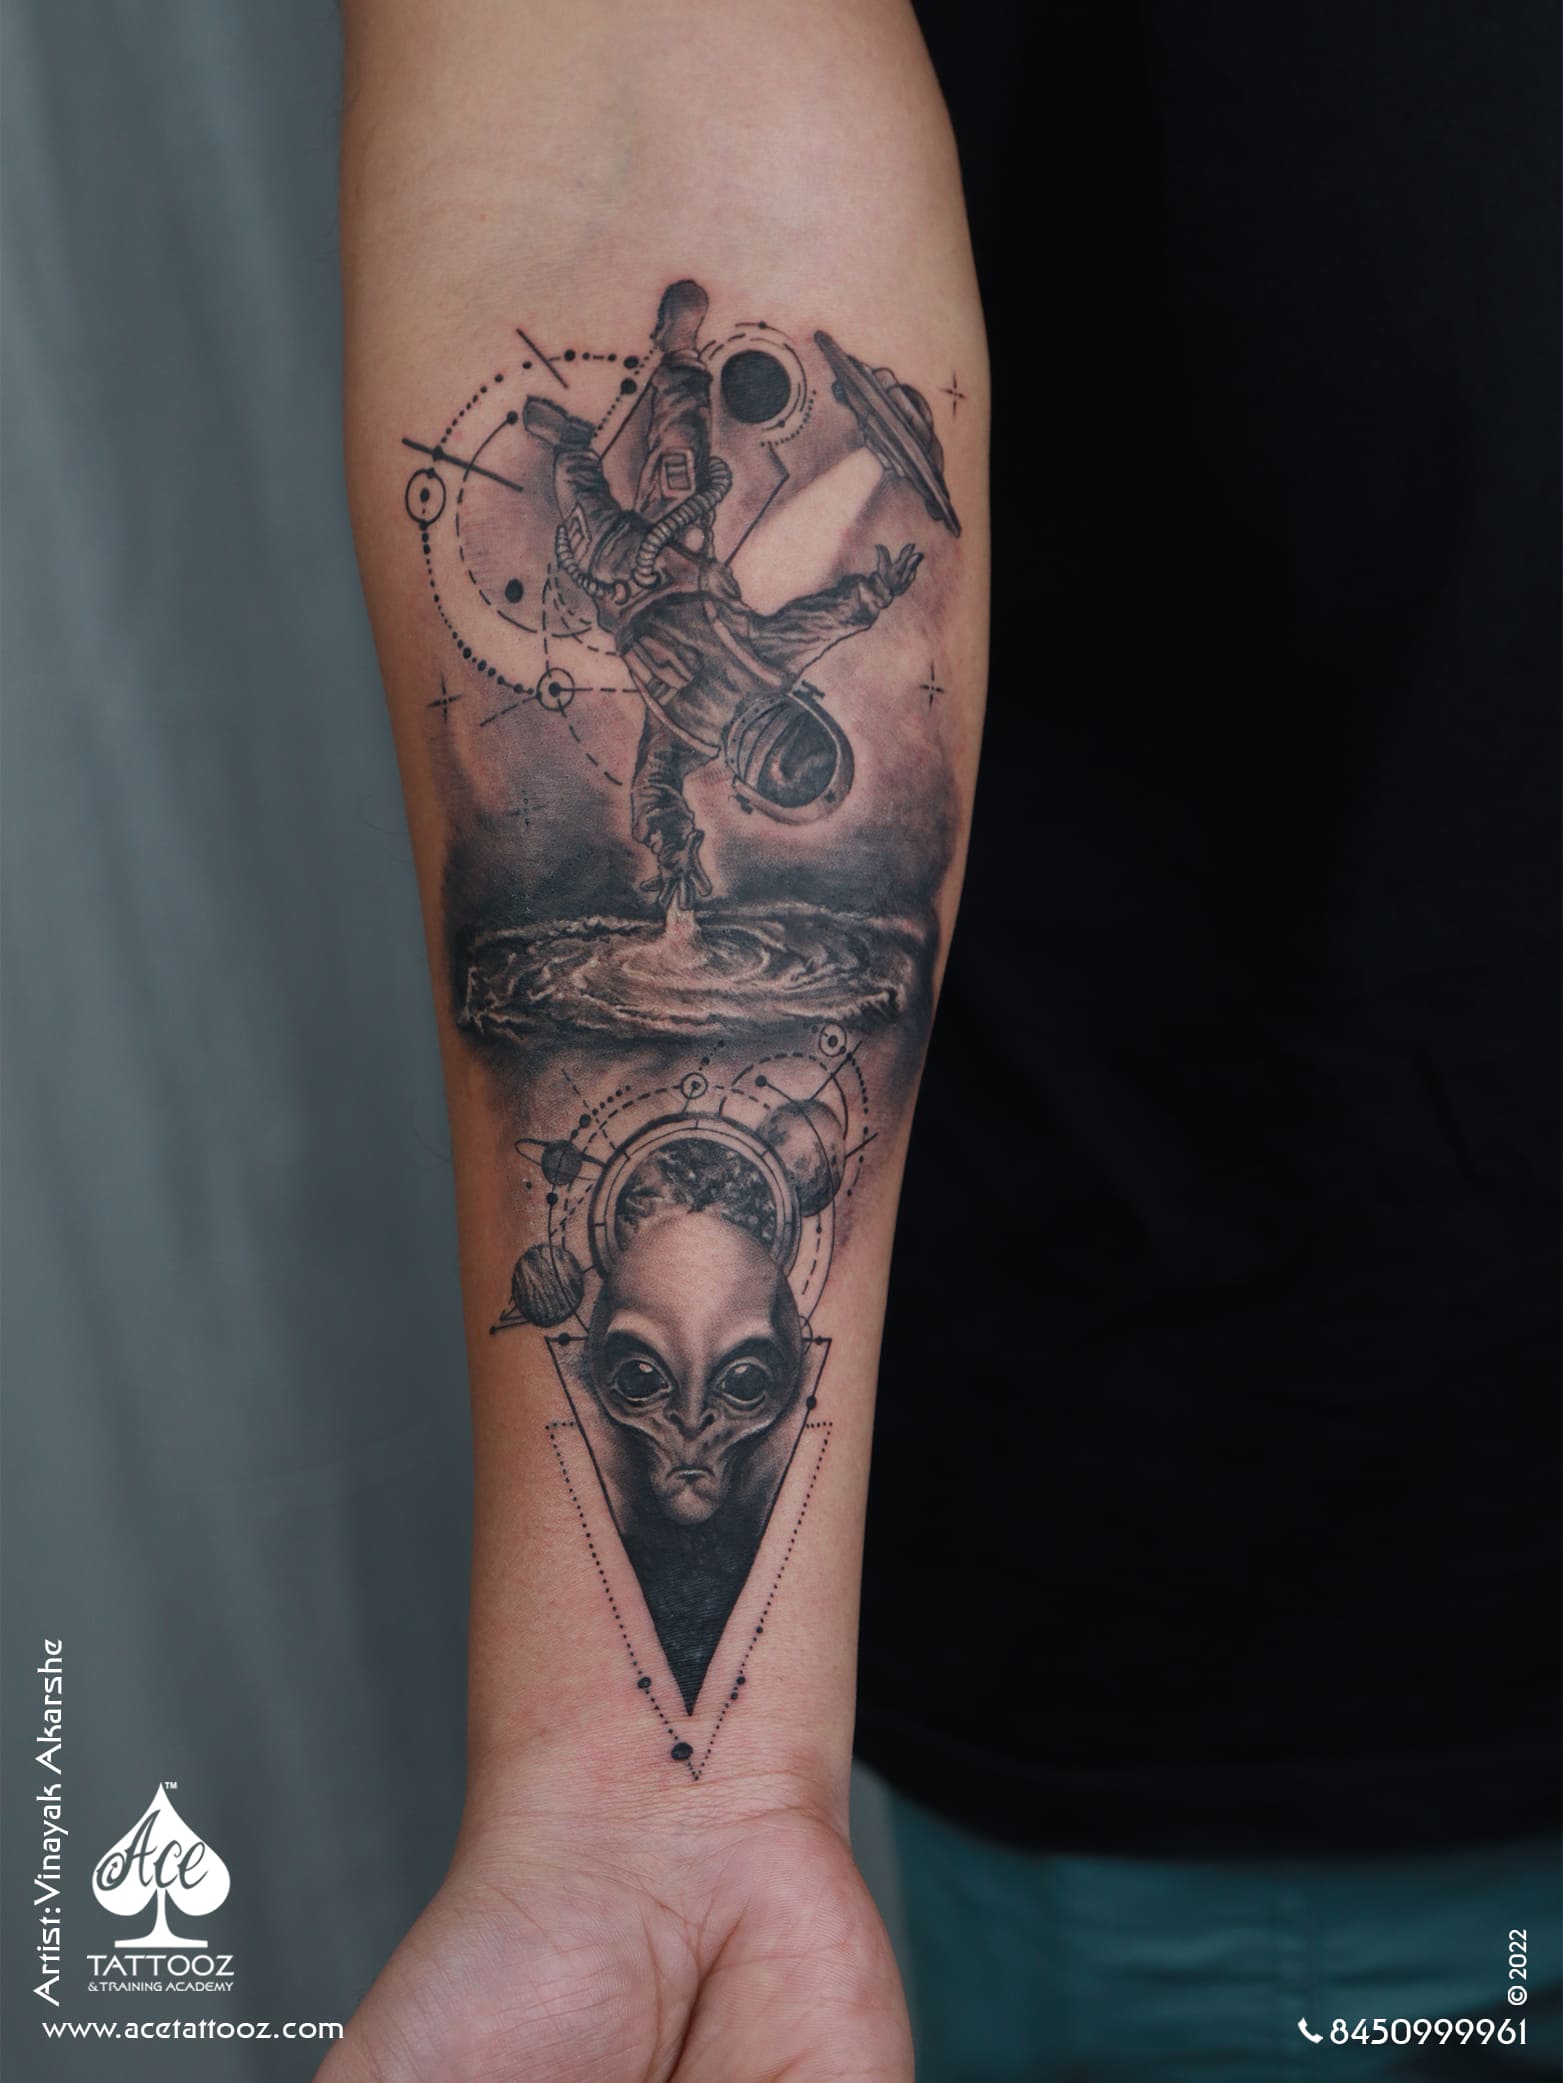 I Never Liked Tattoos, But Then I Got Vitiligo. | by Marisa Krause | Medium